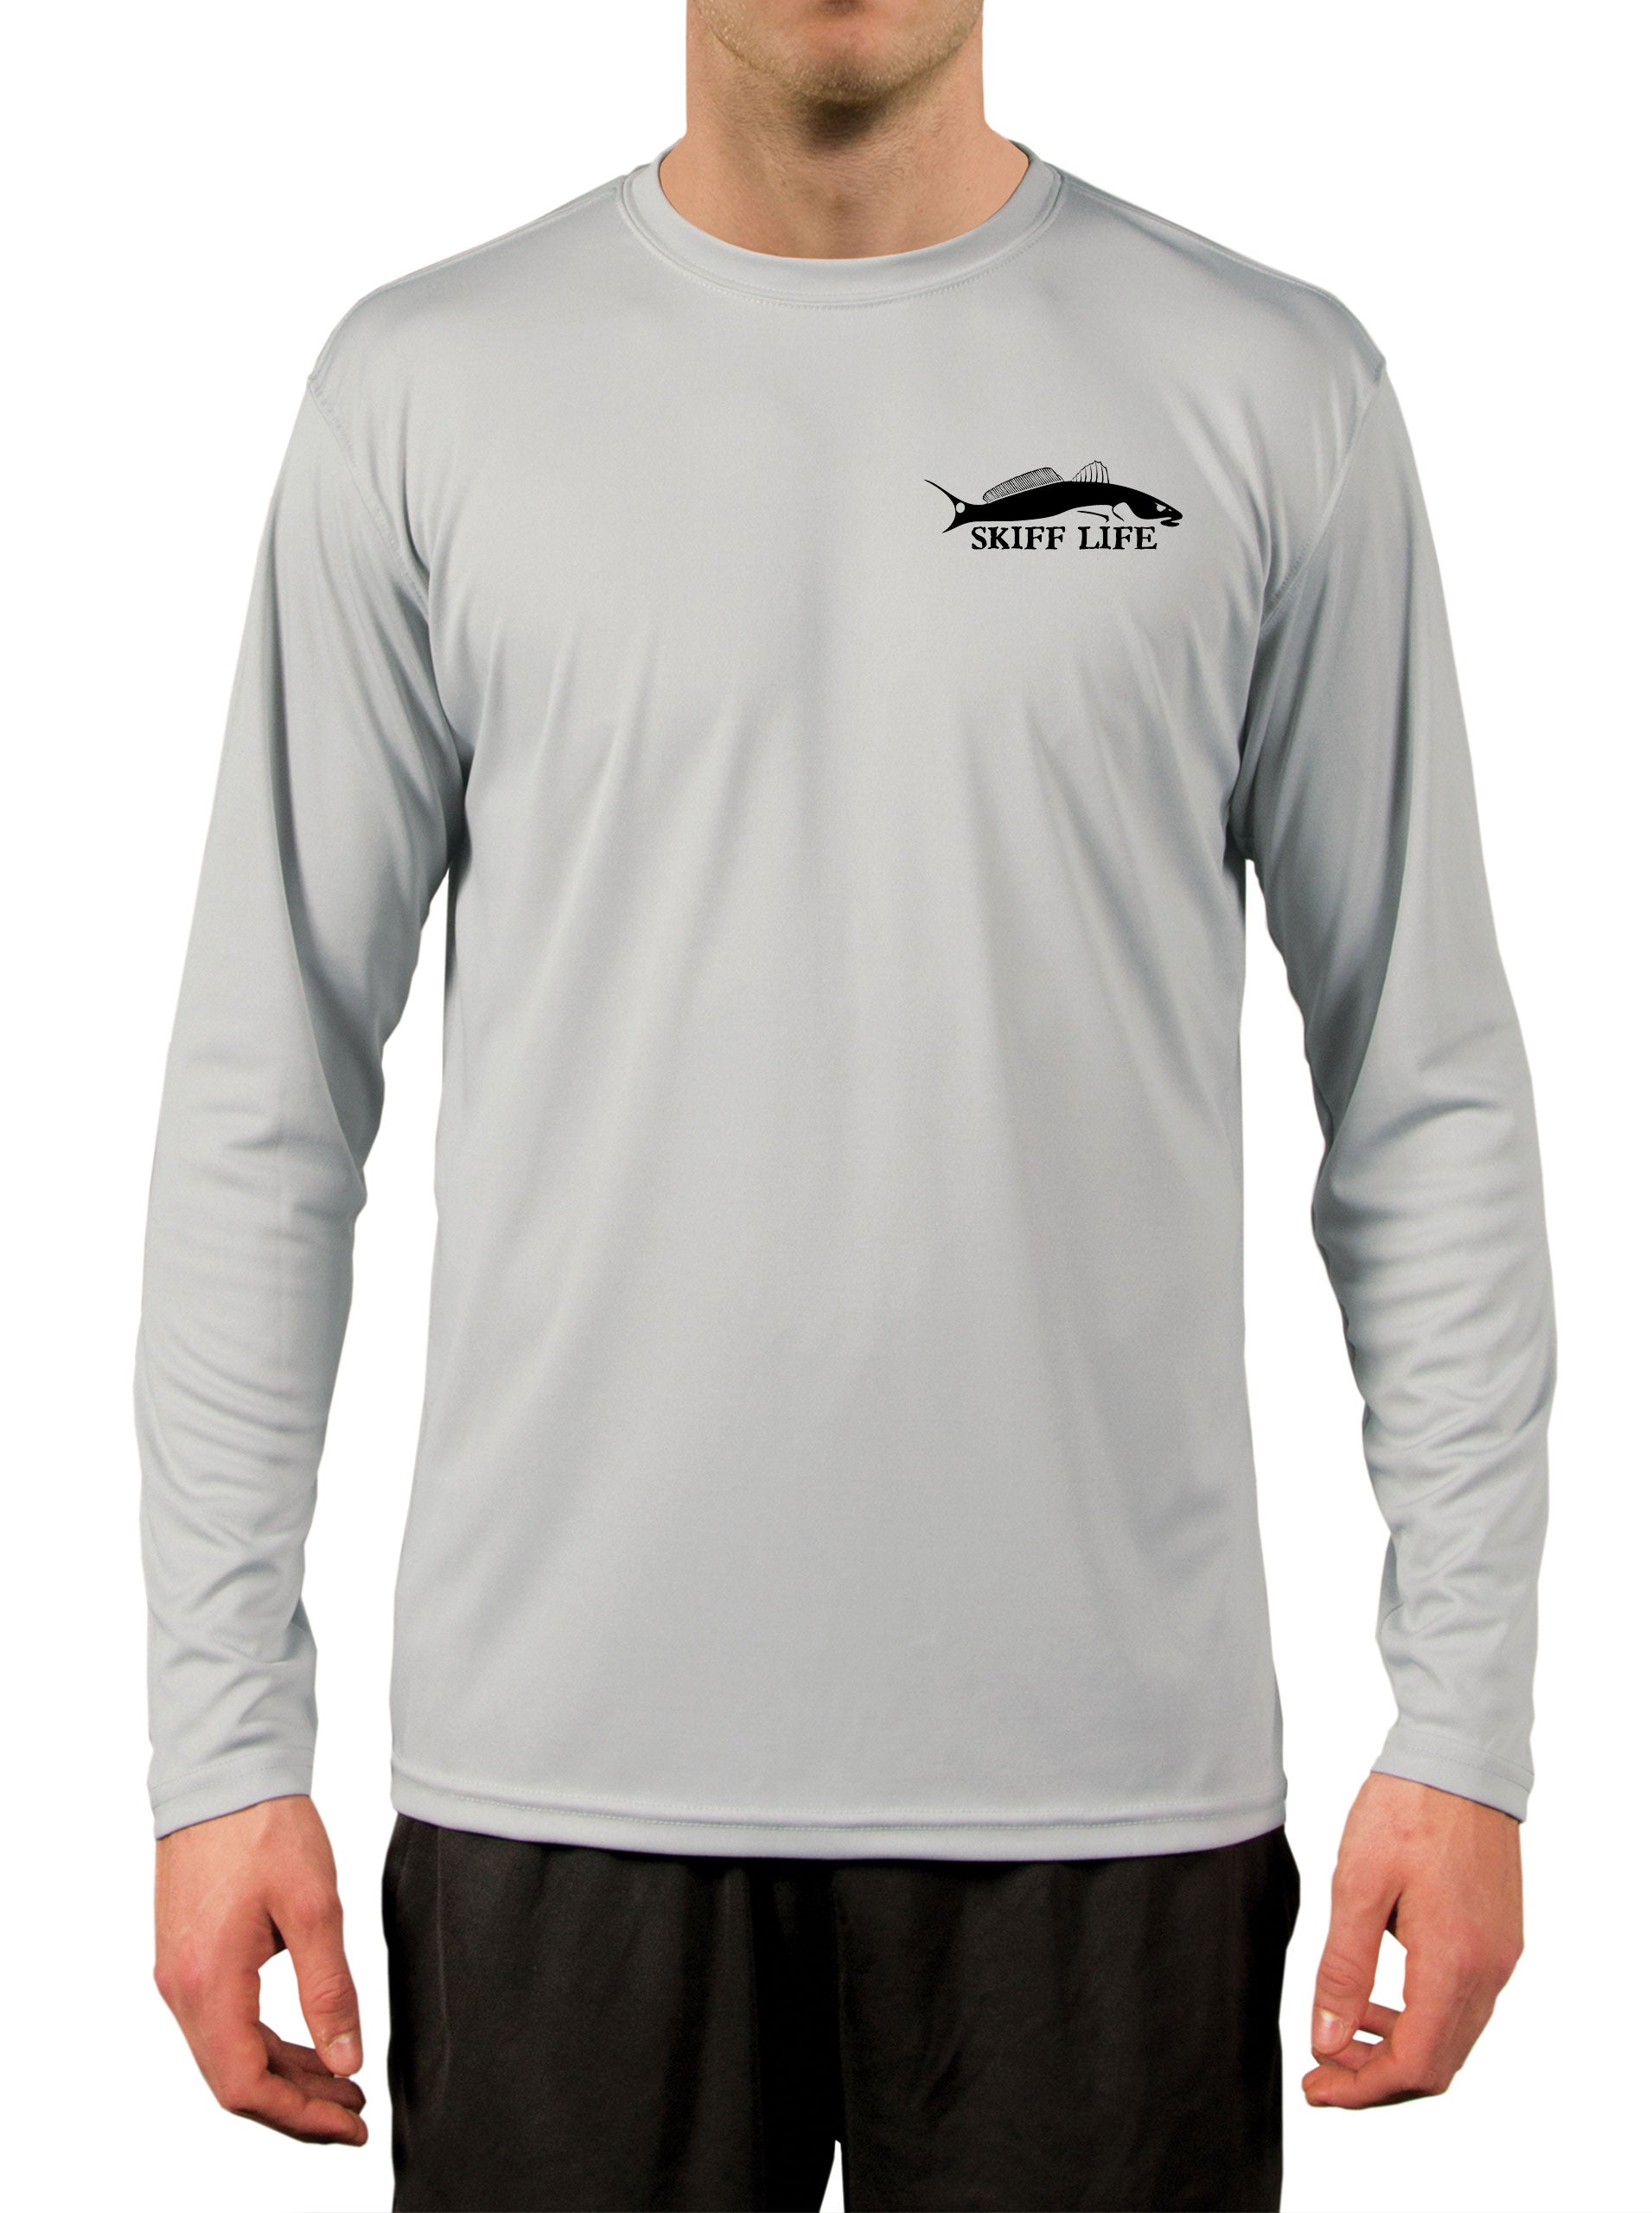 Fishing Shirts Men's Quick Dry Lightweight UPF 50+ Long Sleeve Shirts Rash Guard Swim Shirts Hiking Shirts Moisture Wicking Small / Pearl Gray